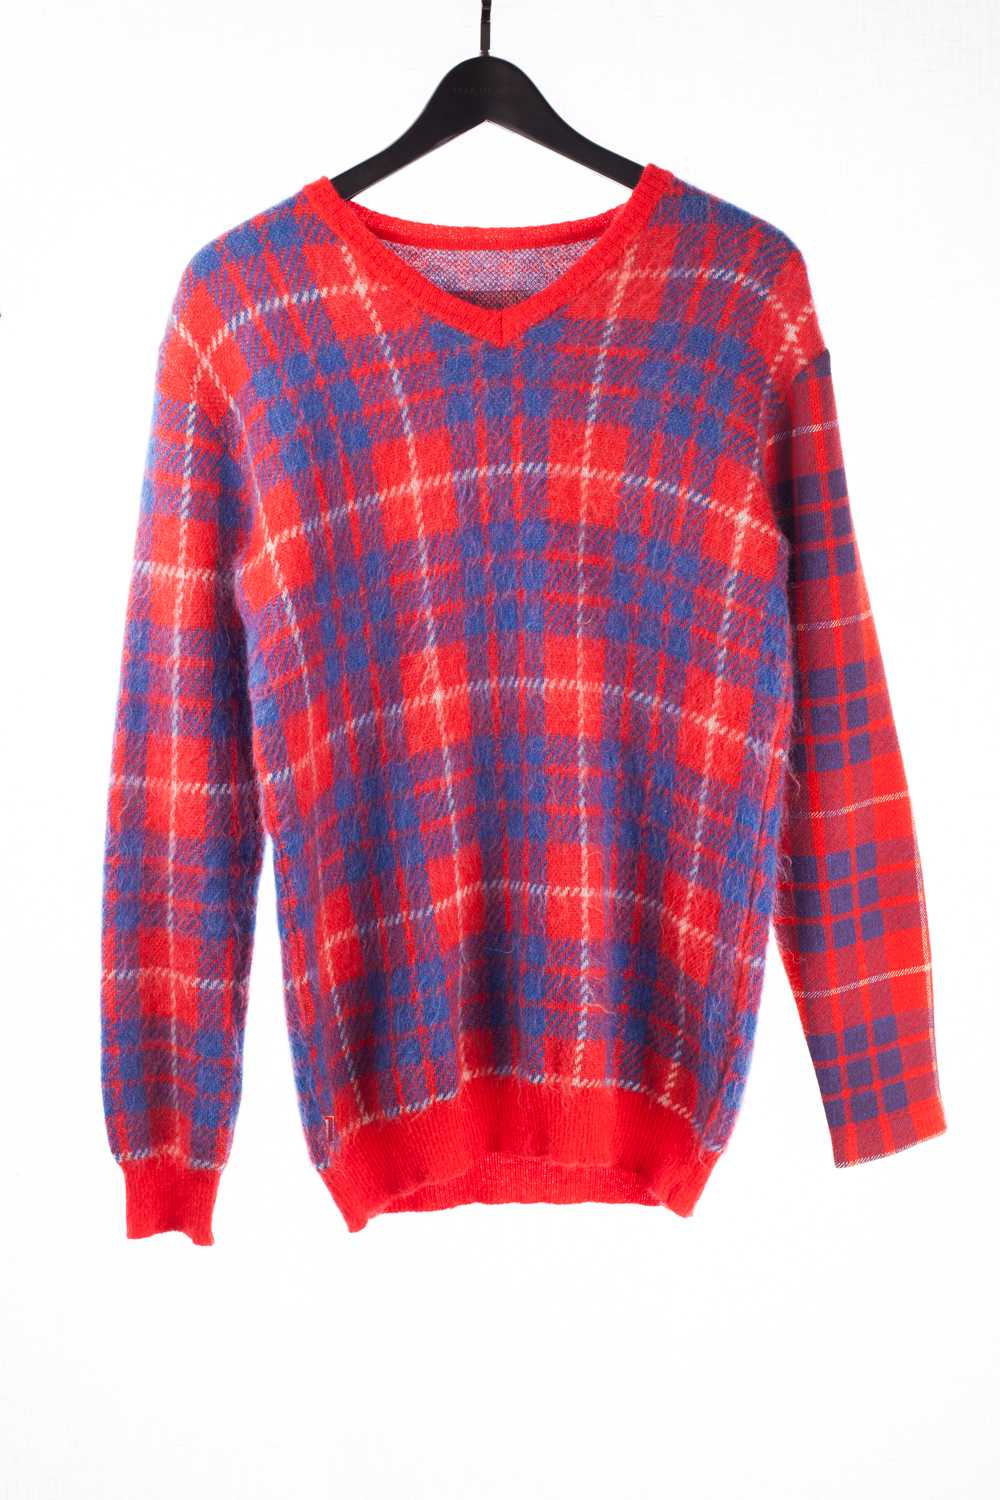 FW00 “Melting Pot” 3/4 Mohair Sweater - image 1